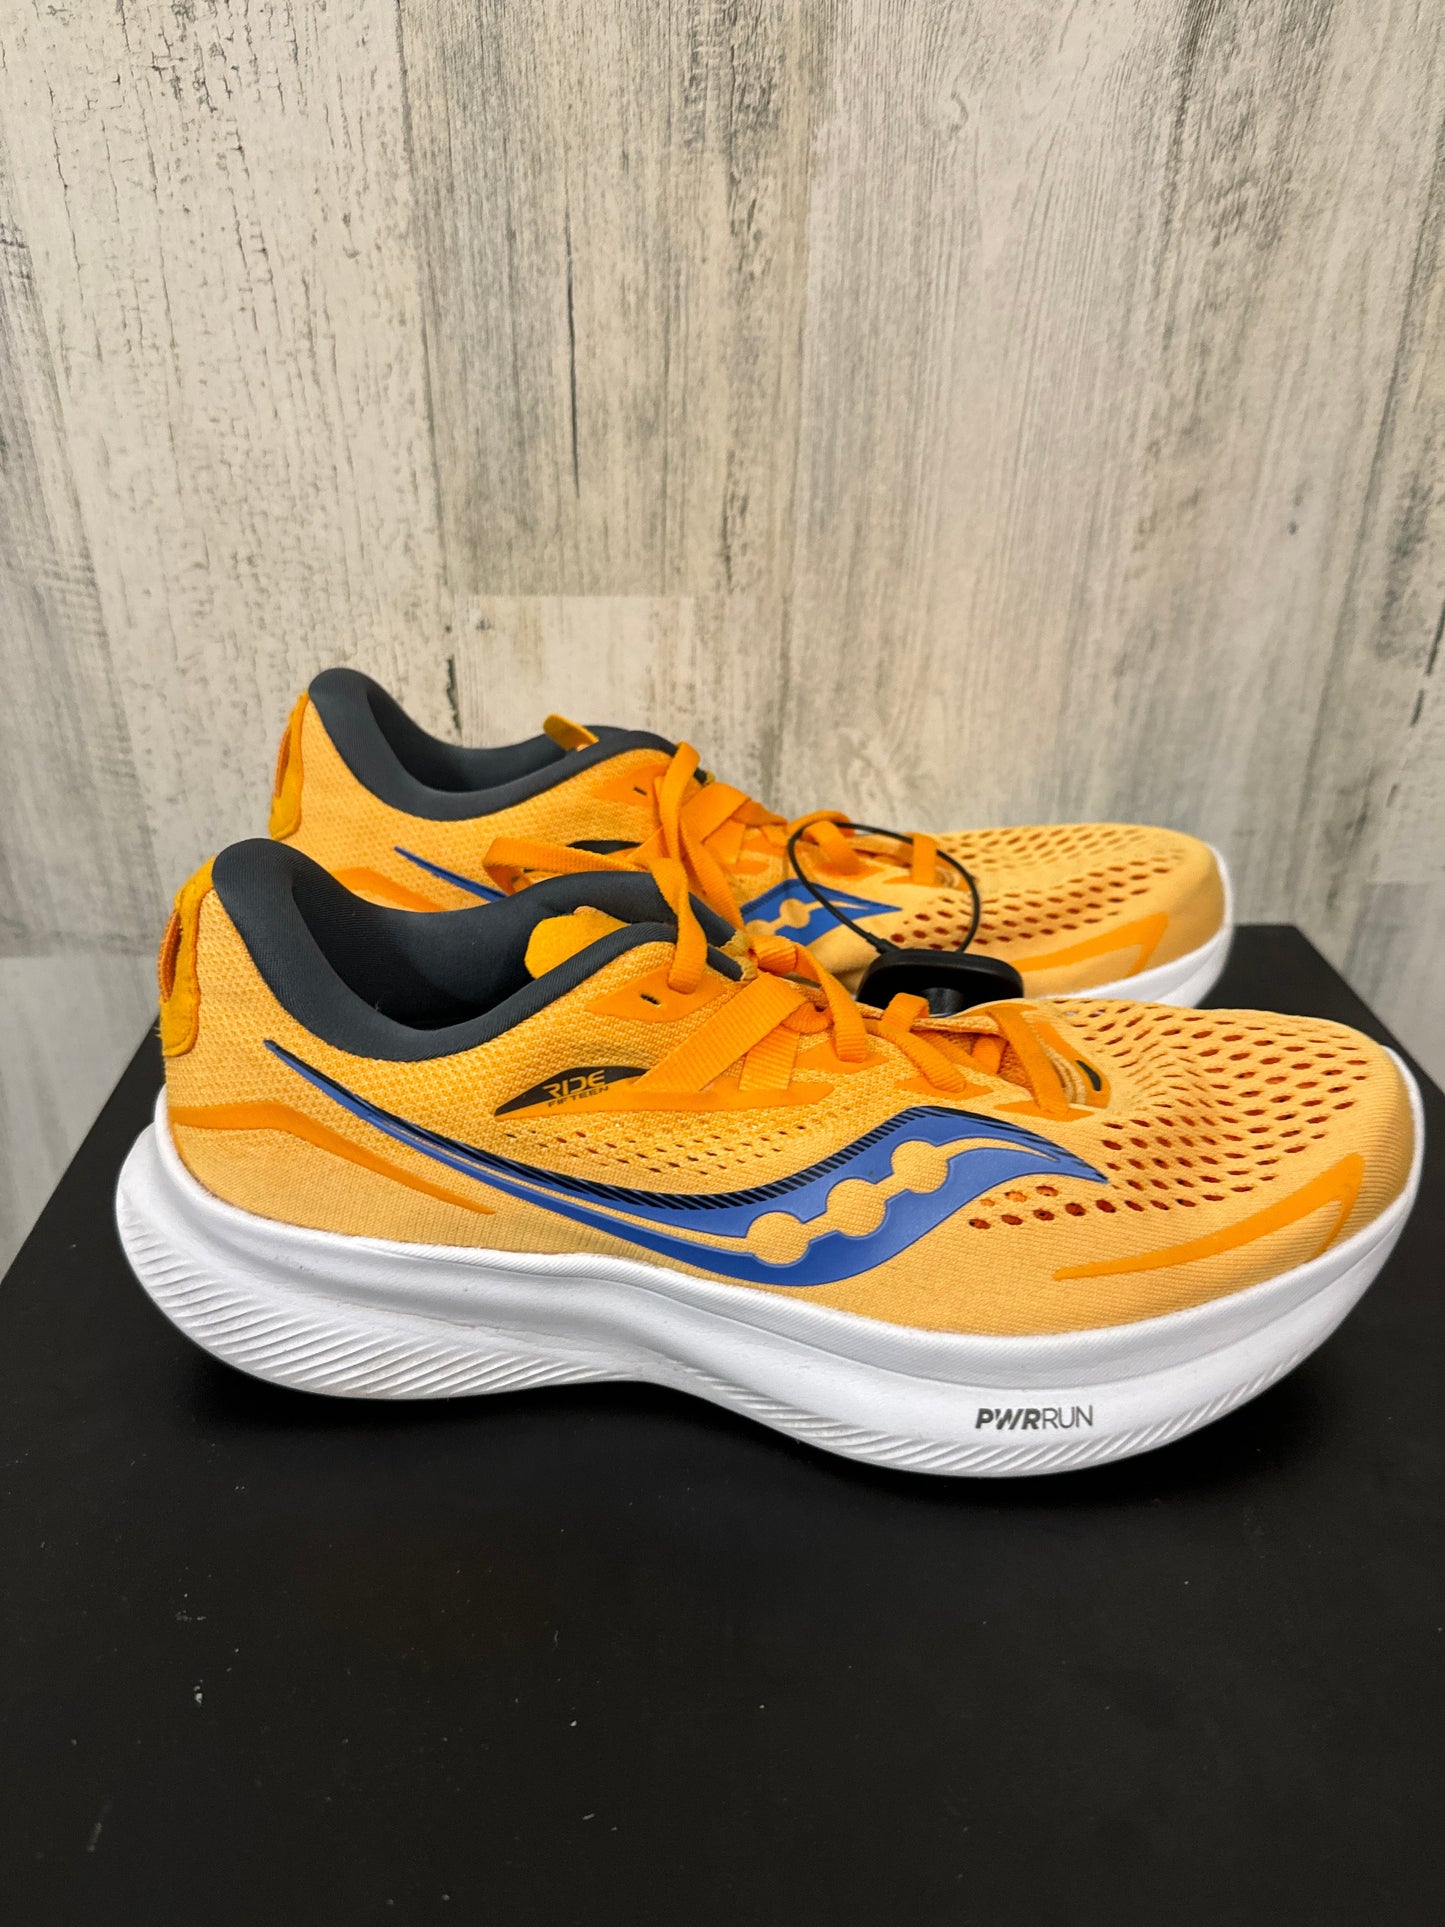 Orange Shoes Athletic Saucony, Size 9